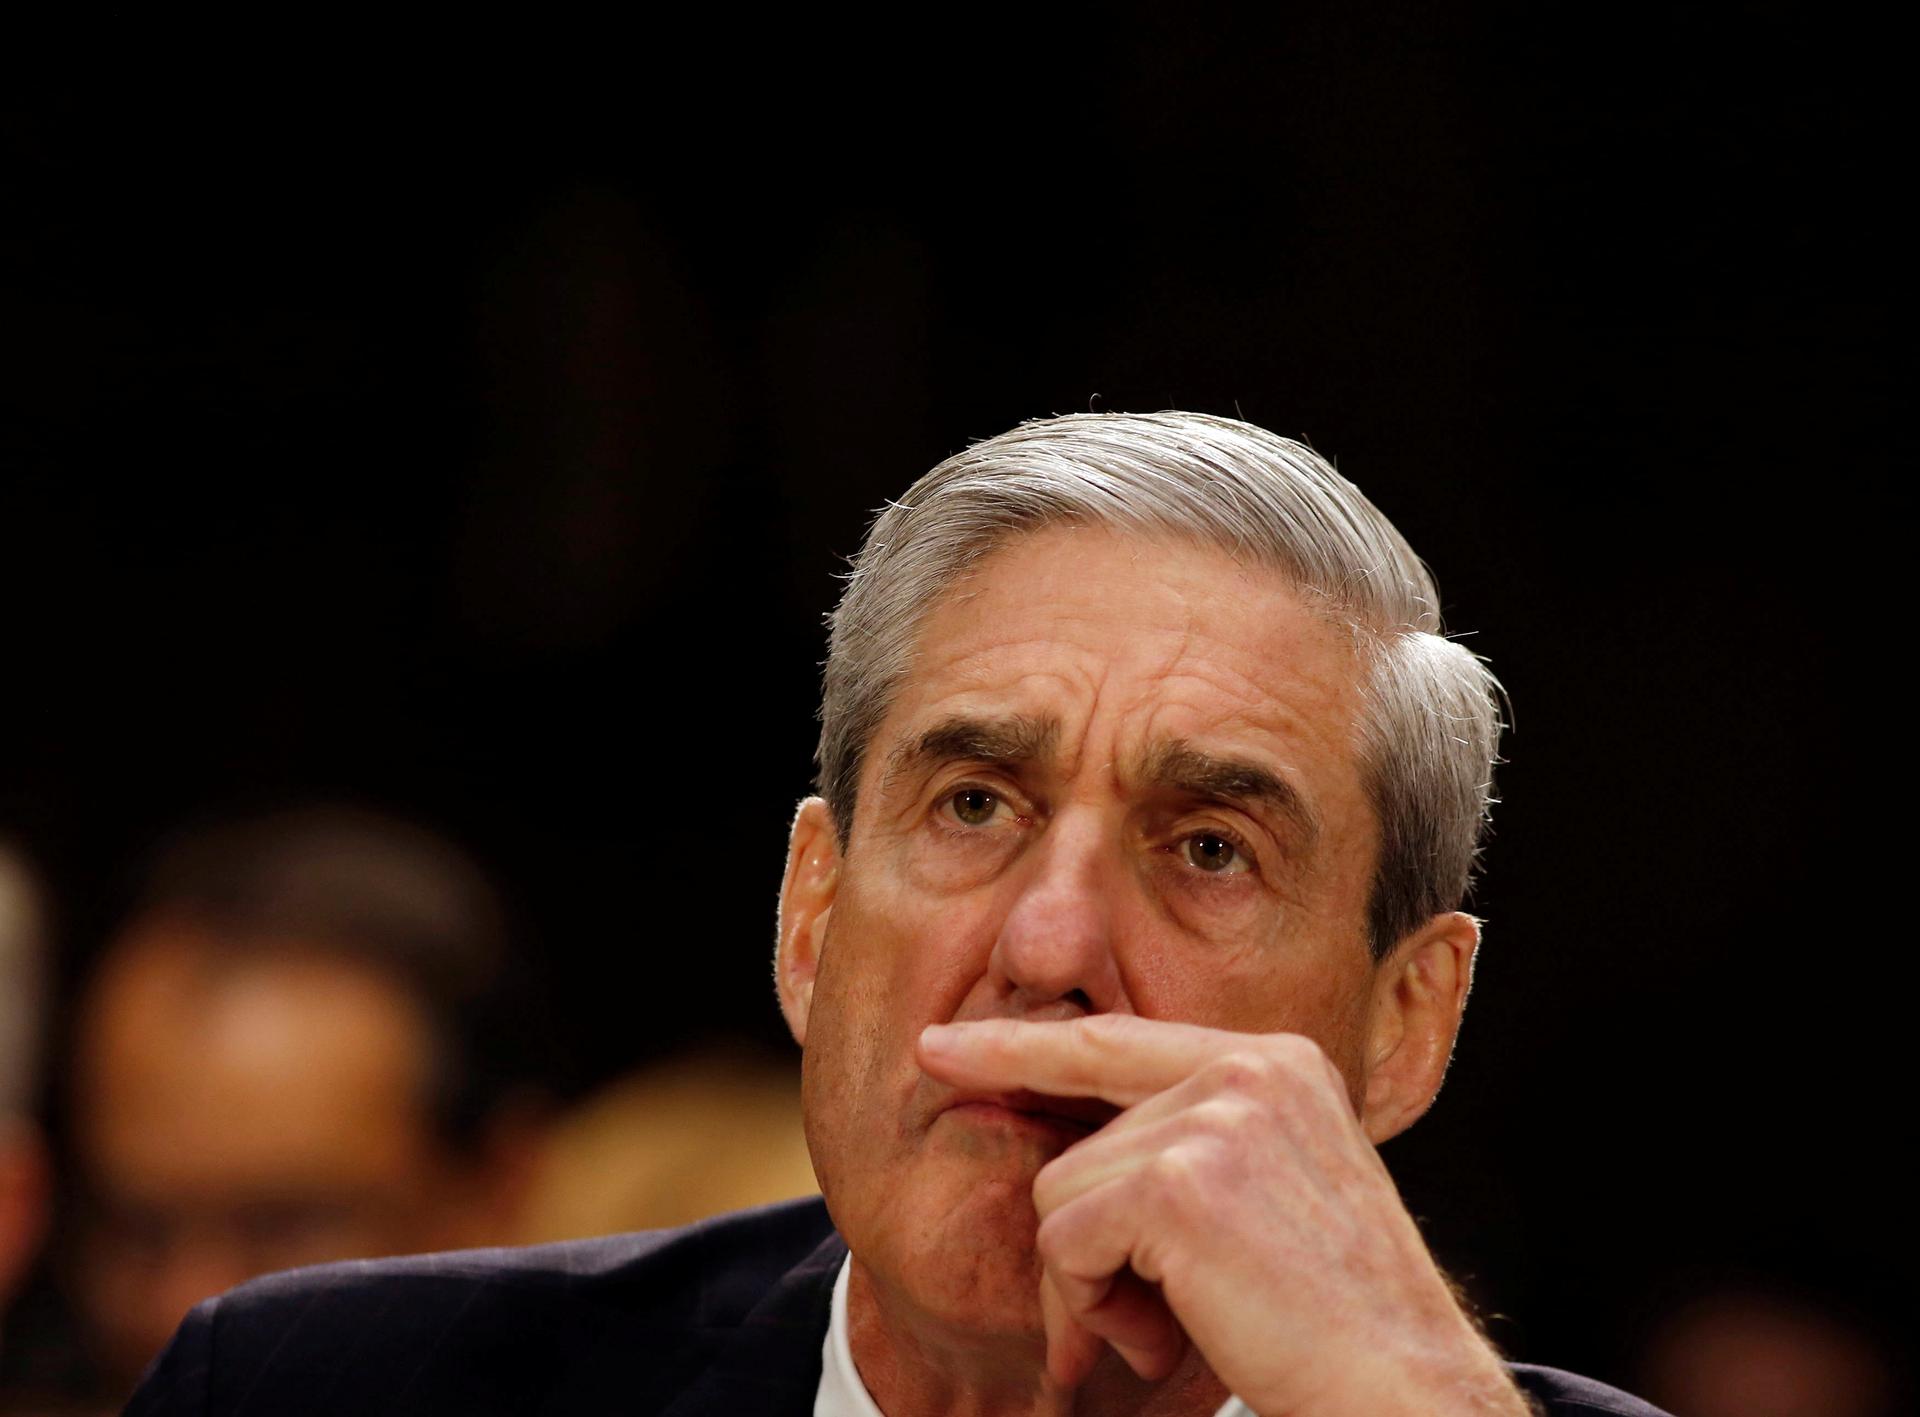 Mueller has a pensive face. 